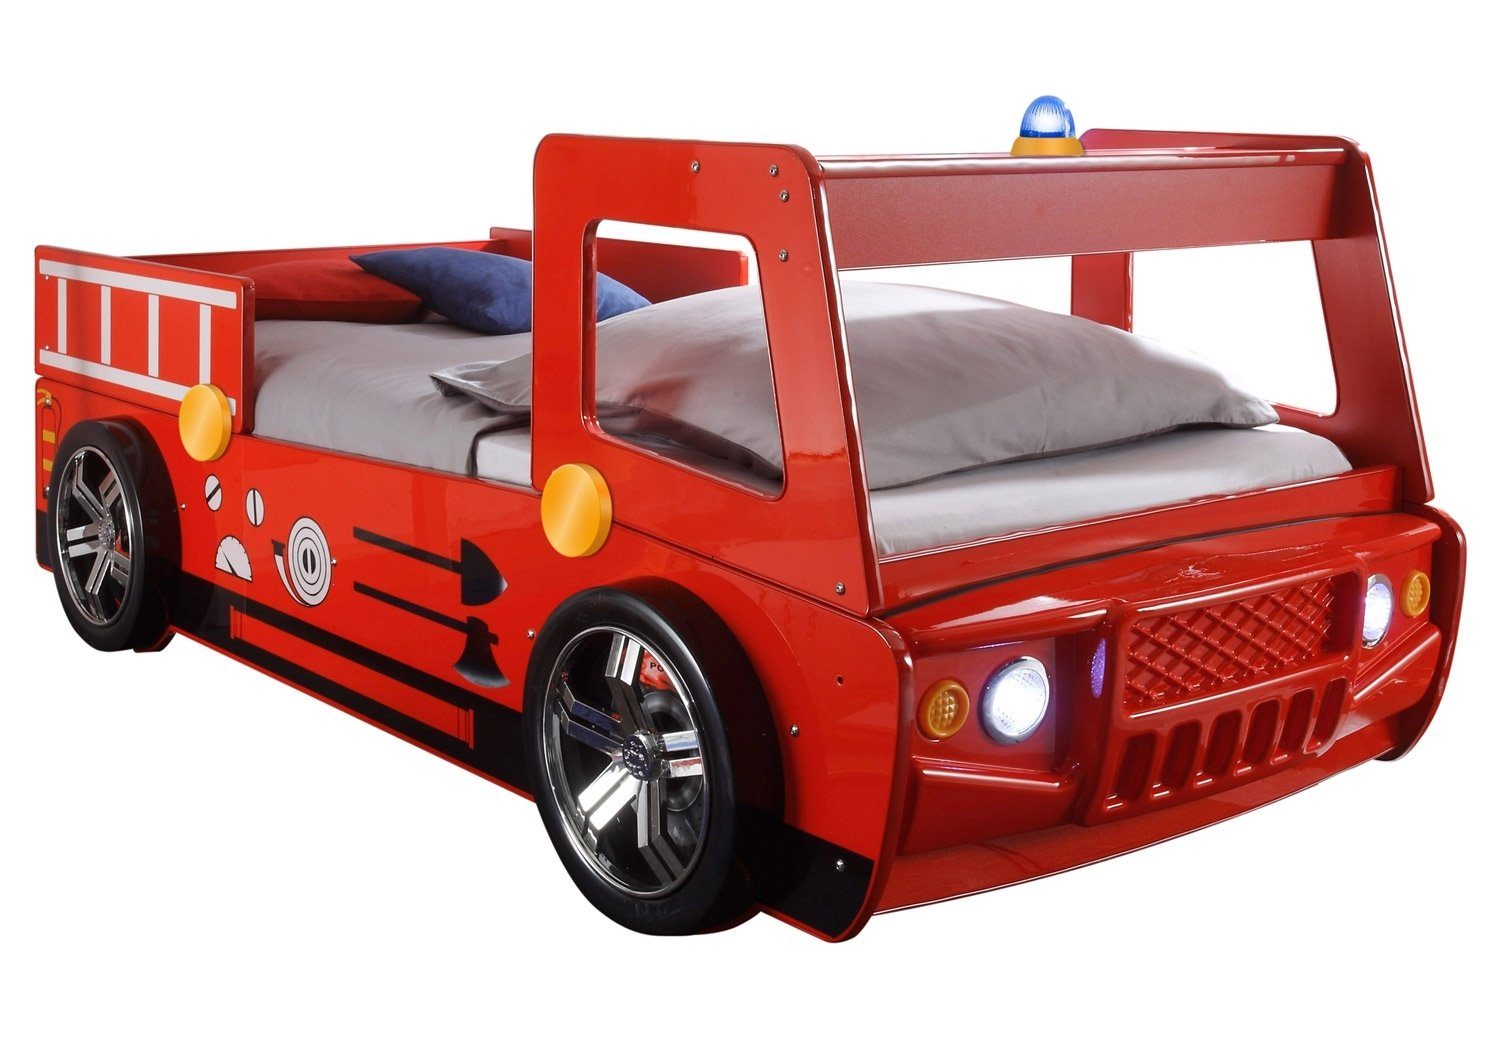 Begabino Kinderbett SPARK, B 108 x L 225 cm, Rot, Feuerwehrauto mit Blaulicht, inkl. LED-Beleuchtung